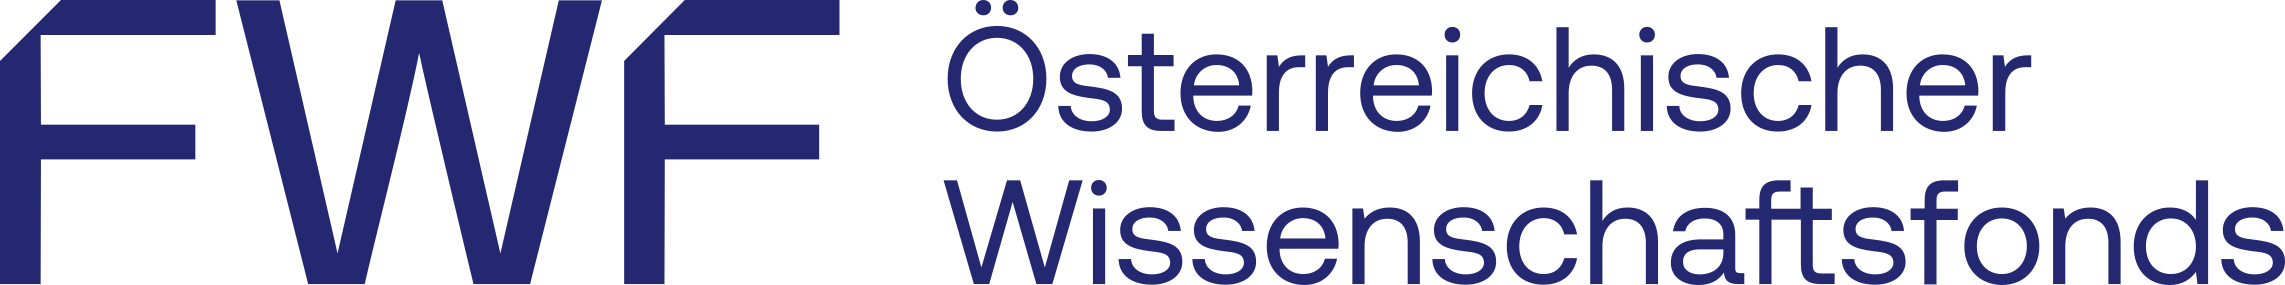 Logo - Austrian Science Fund (FWF)